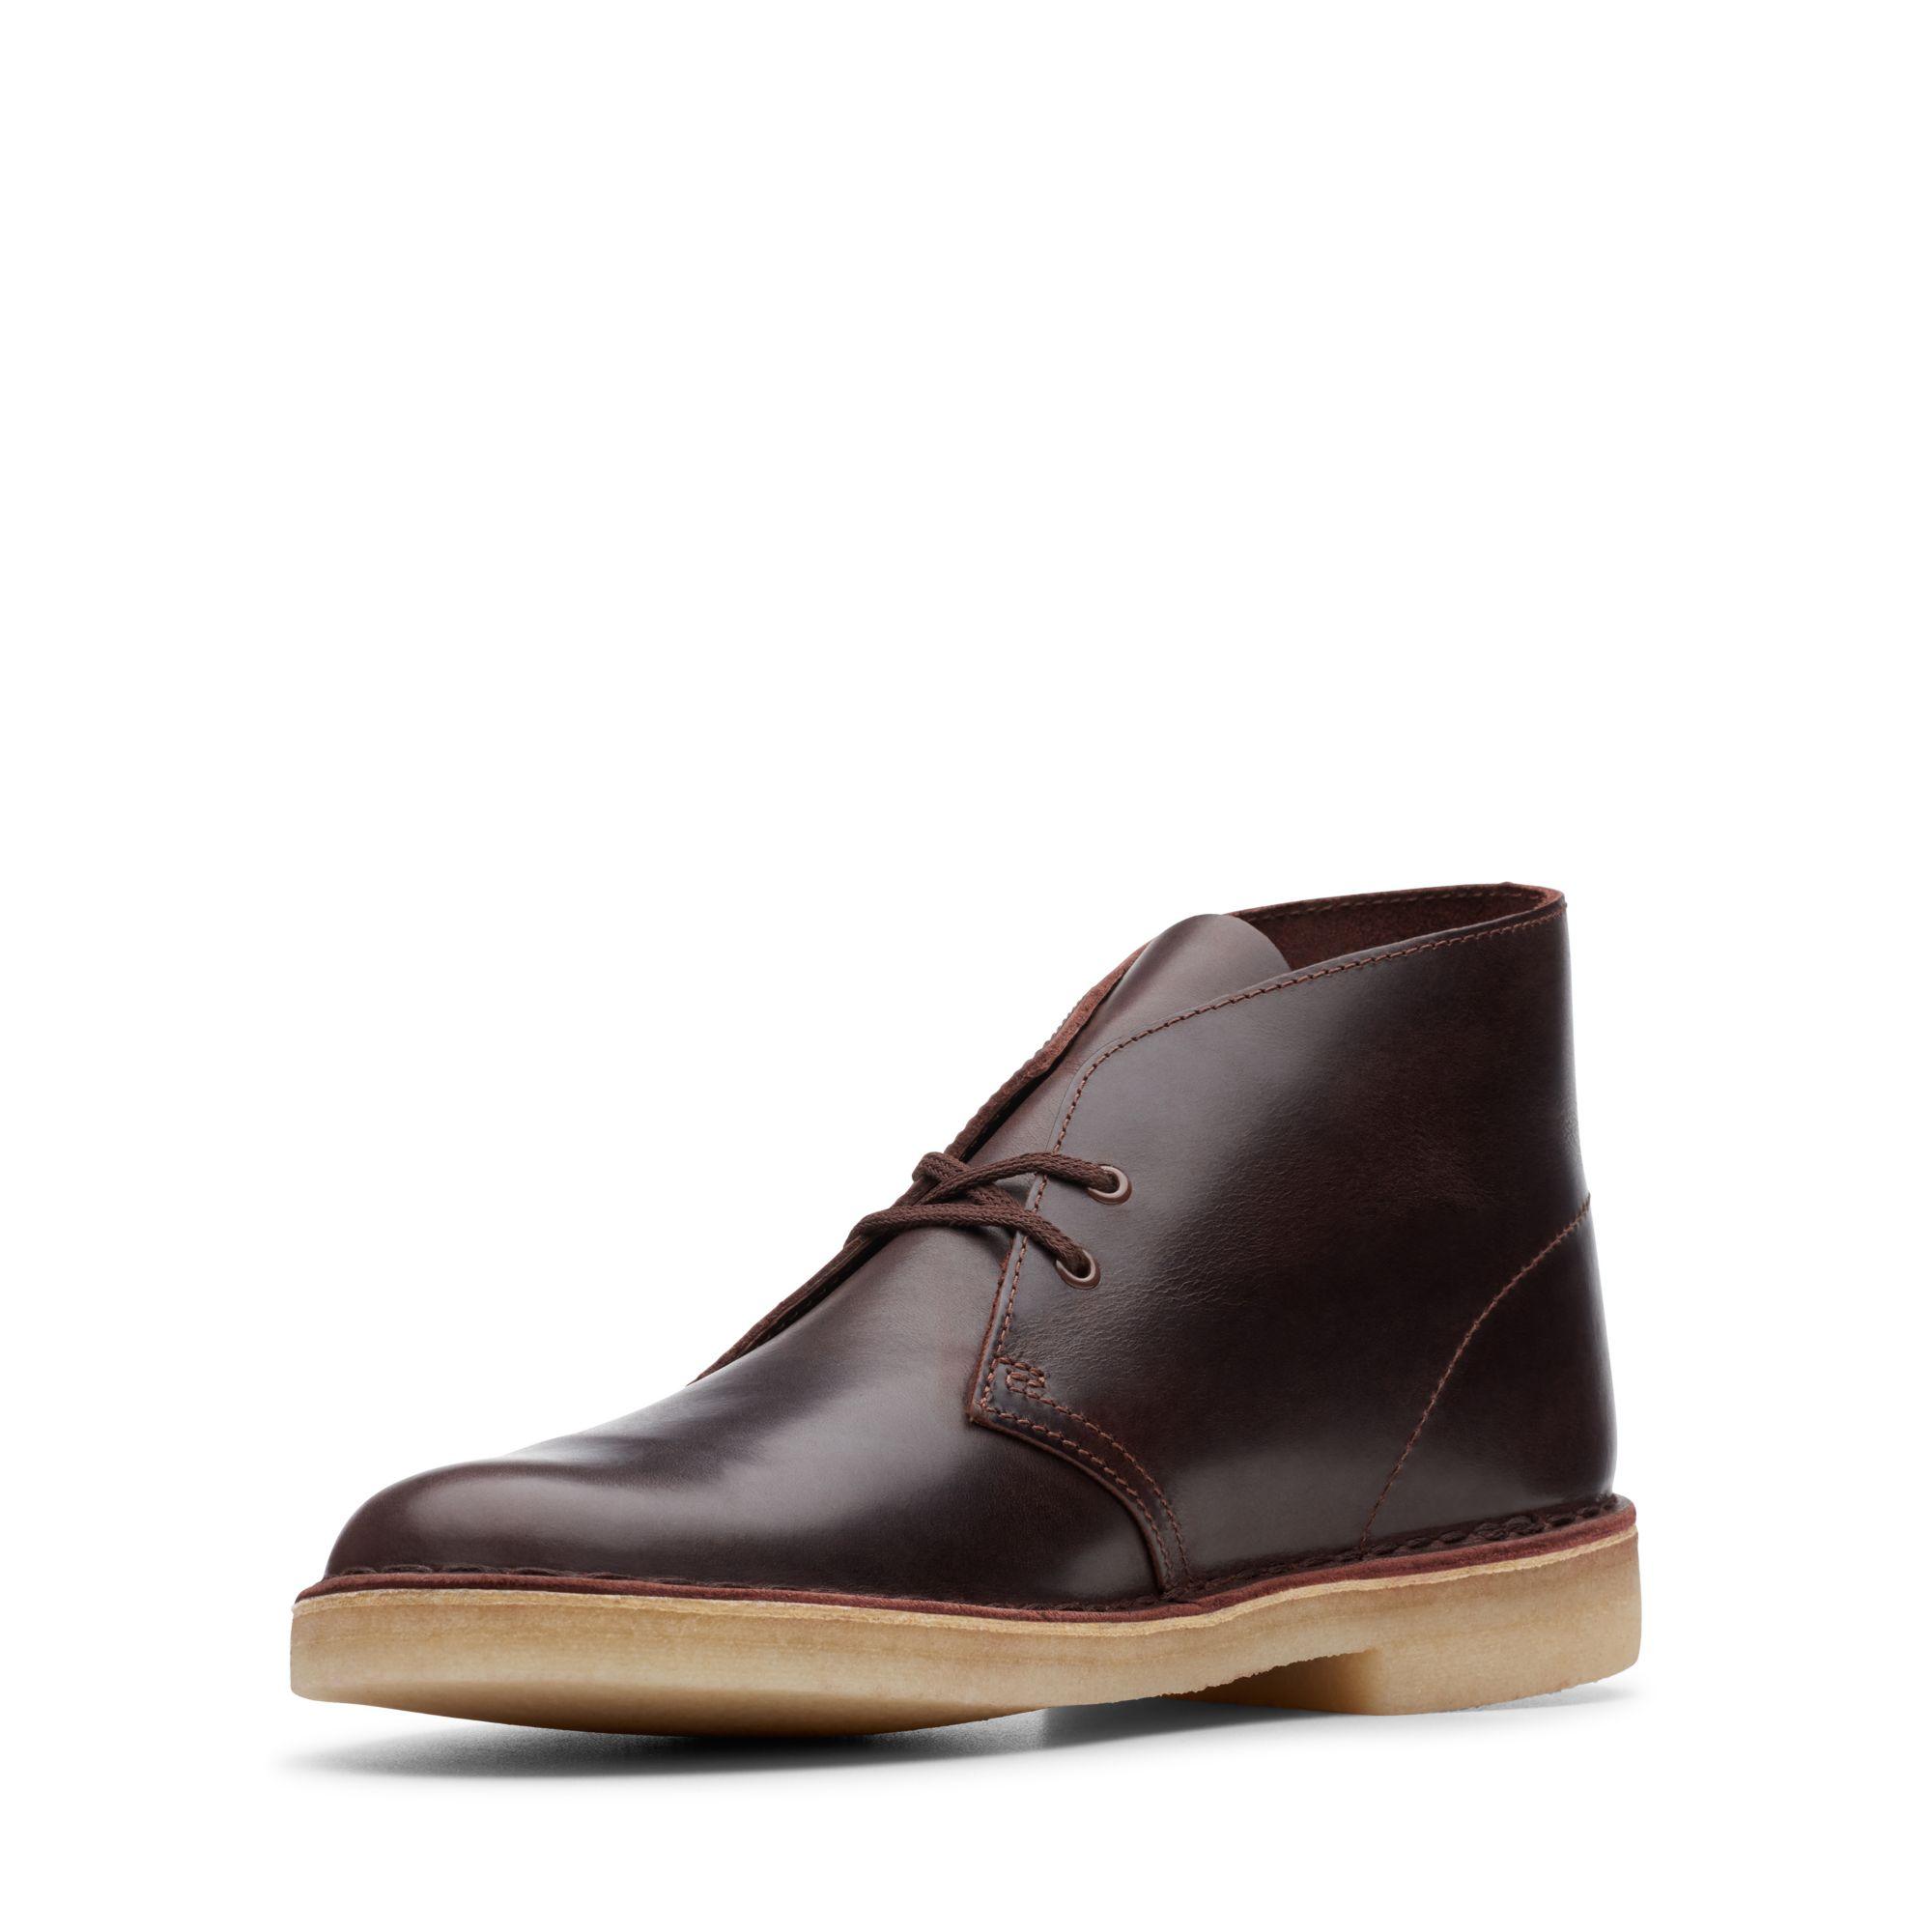 Clarks Leather Desert Boot in Chestnut Leather (Brown) for Men - Lyst